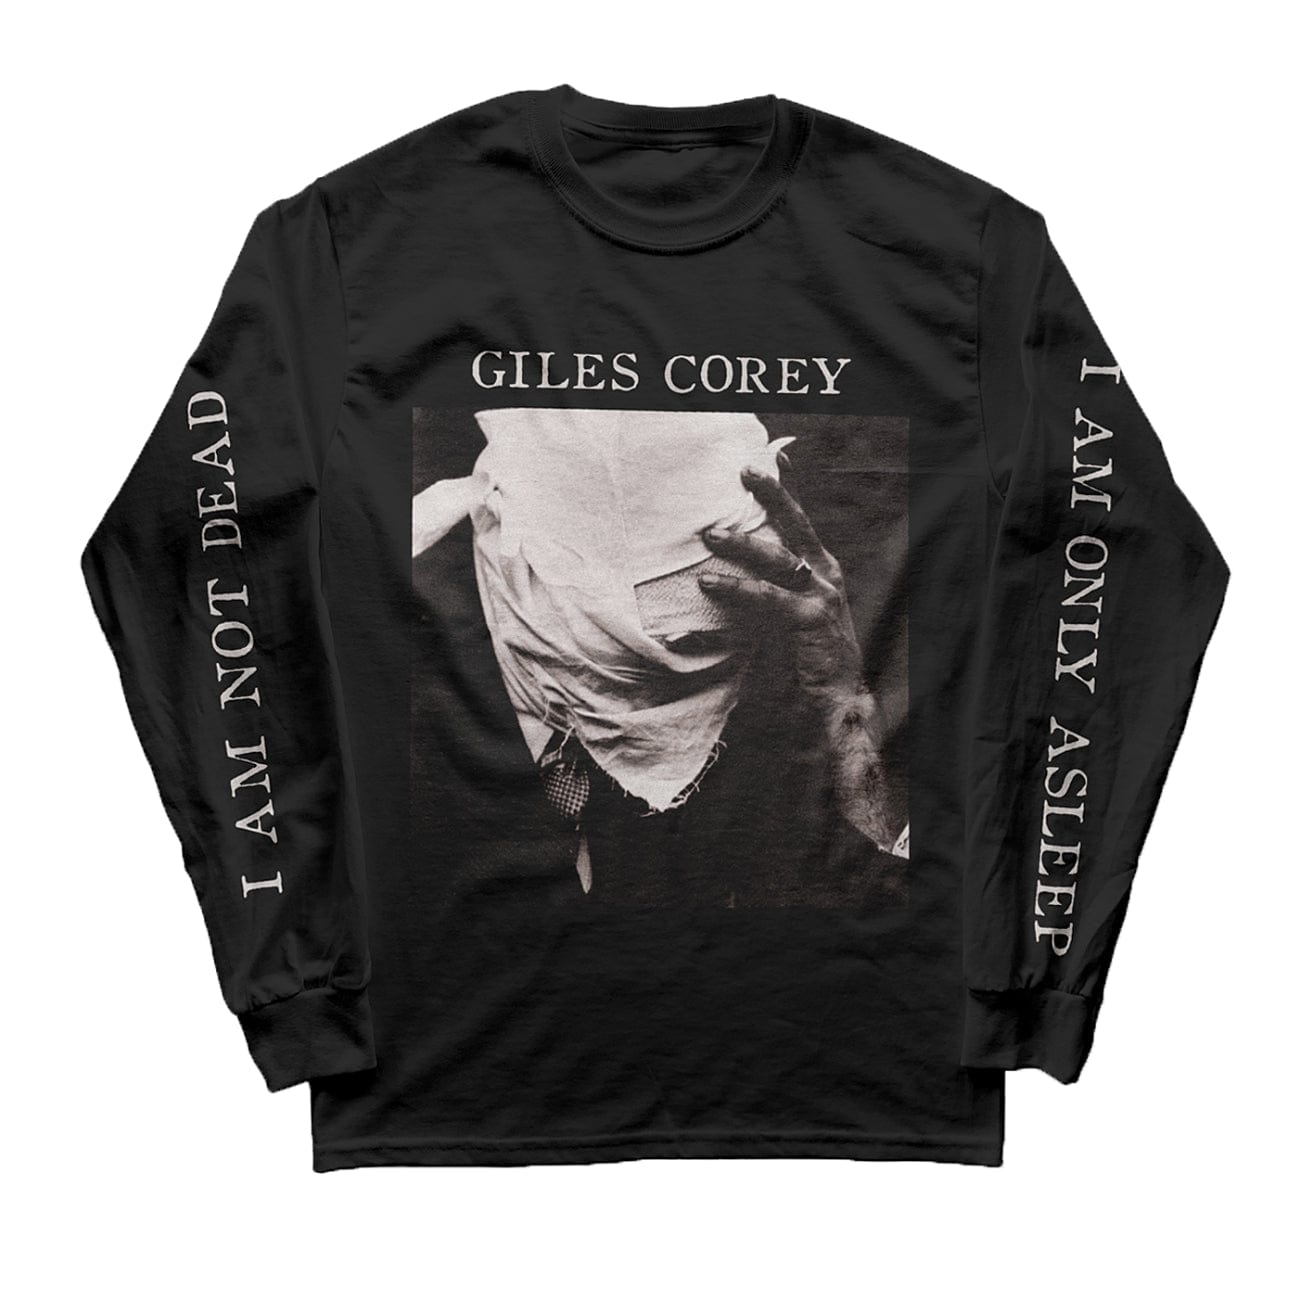 The Flenser Apparel Giles Corey "Giles Corey" Longsleeve Shirt